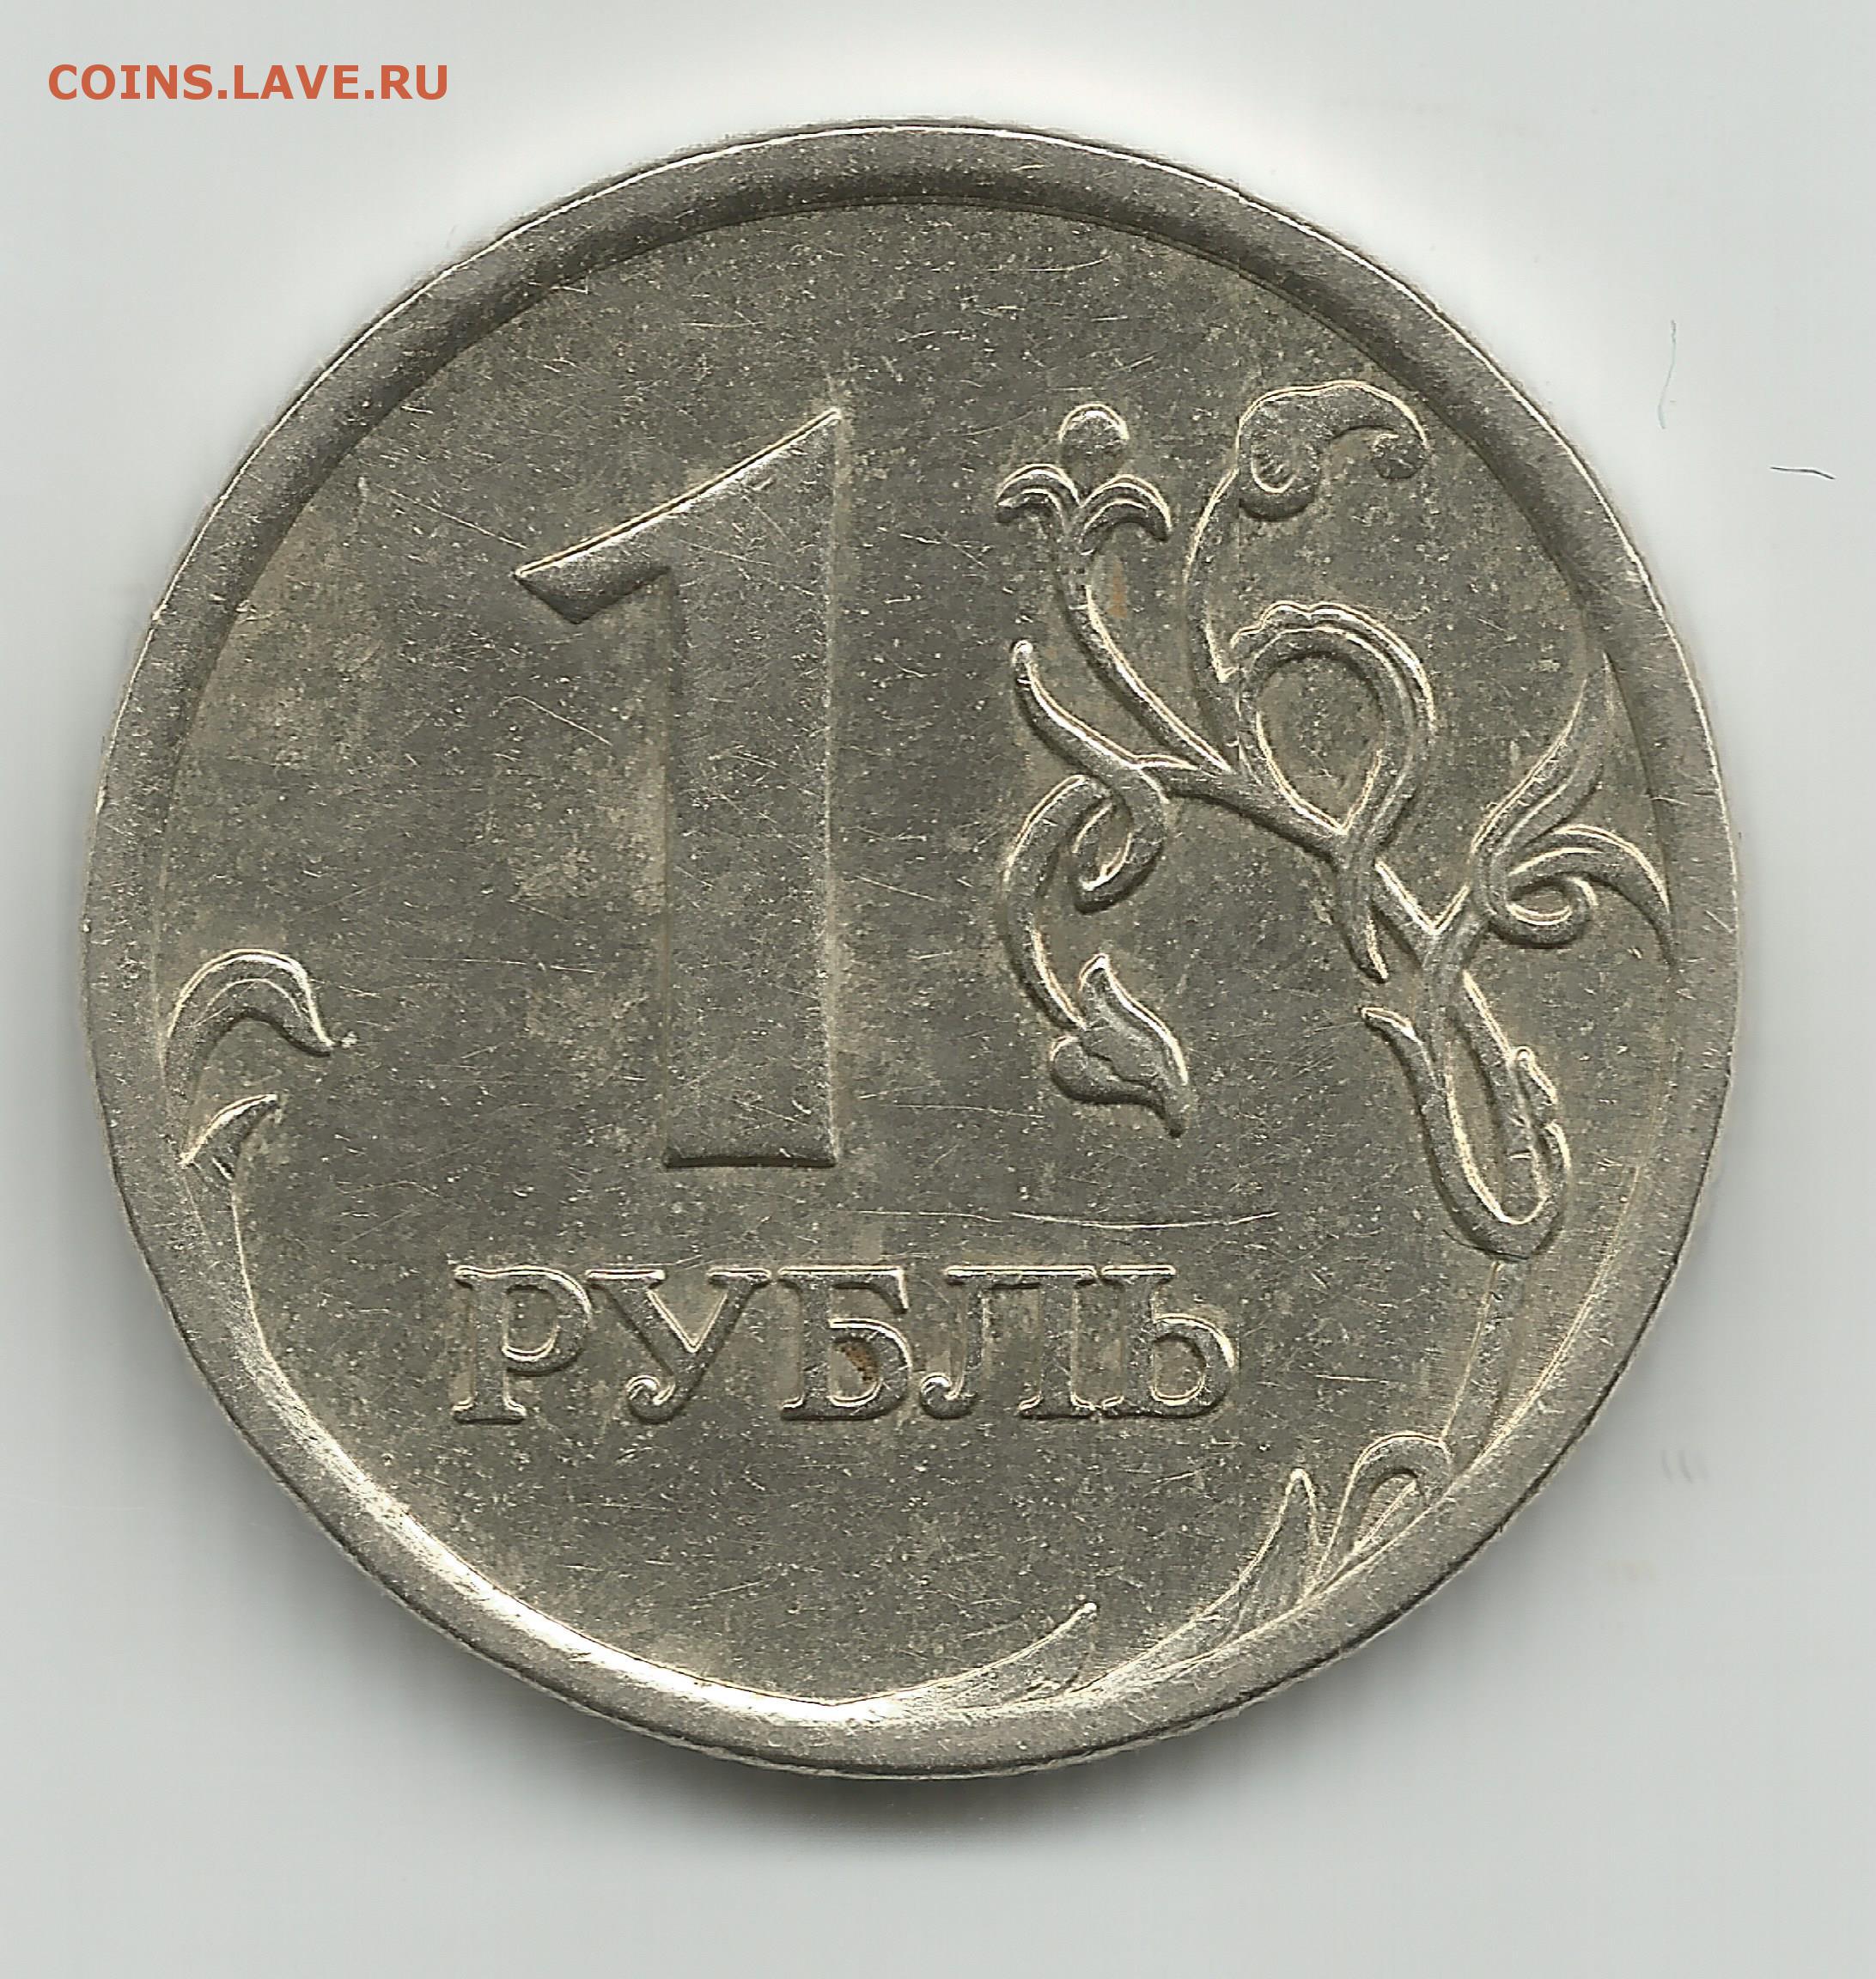 Живем на 1 рубль. Россия 1 рубль 2005 год (СПМД). Монета 1 рубль. Монета 1 рубль на прозрачном фоне. 1 Рубль без фона.